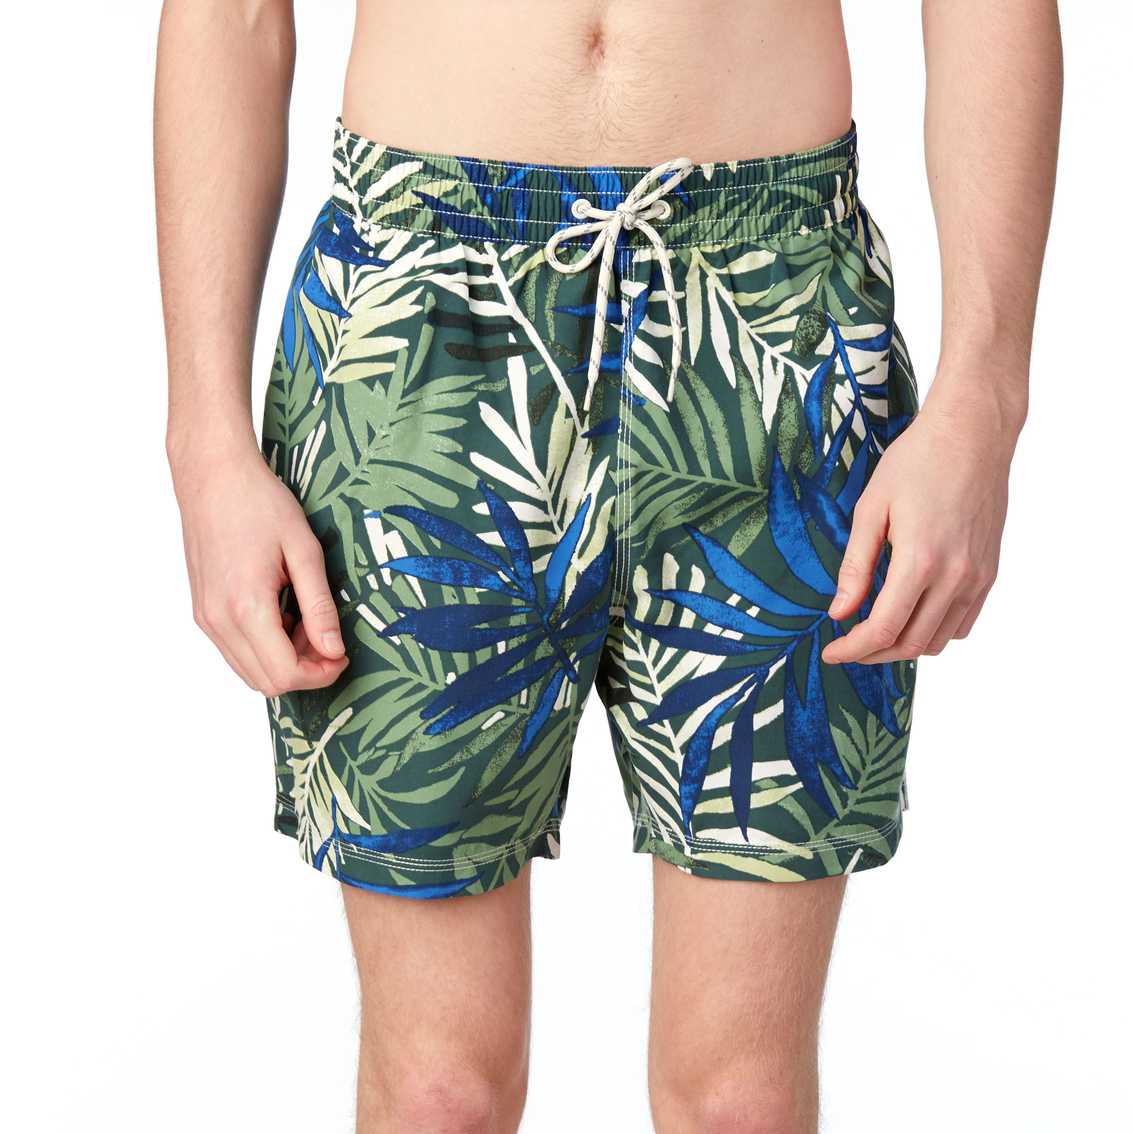 Caribbean Joe Swimwear Leafy Tropical Trunks | Swimwear | Clothing ...